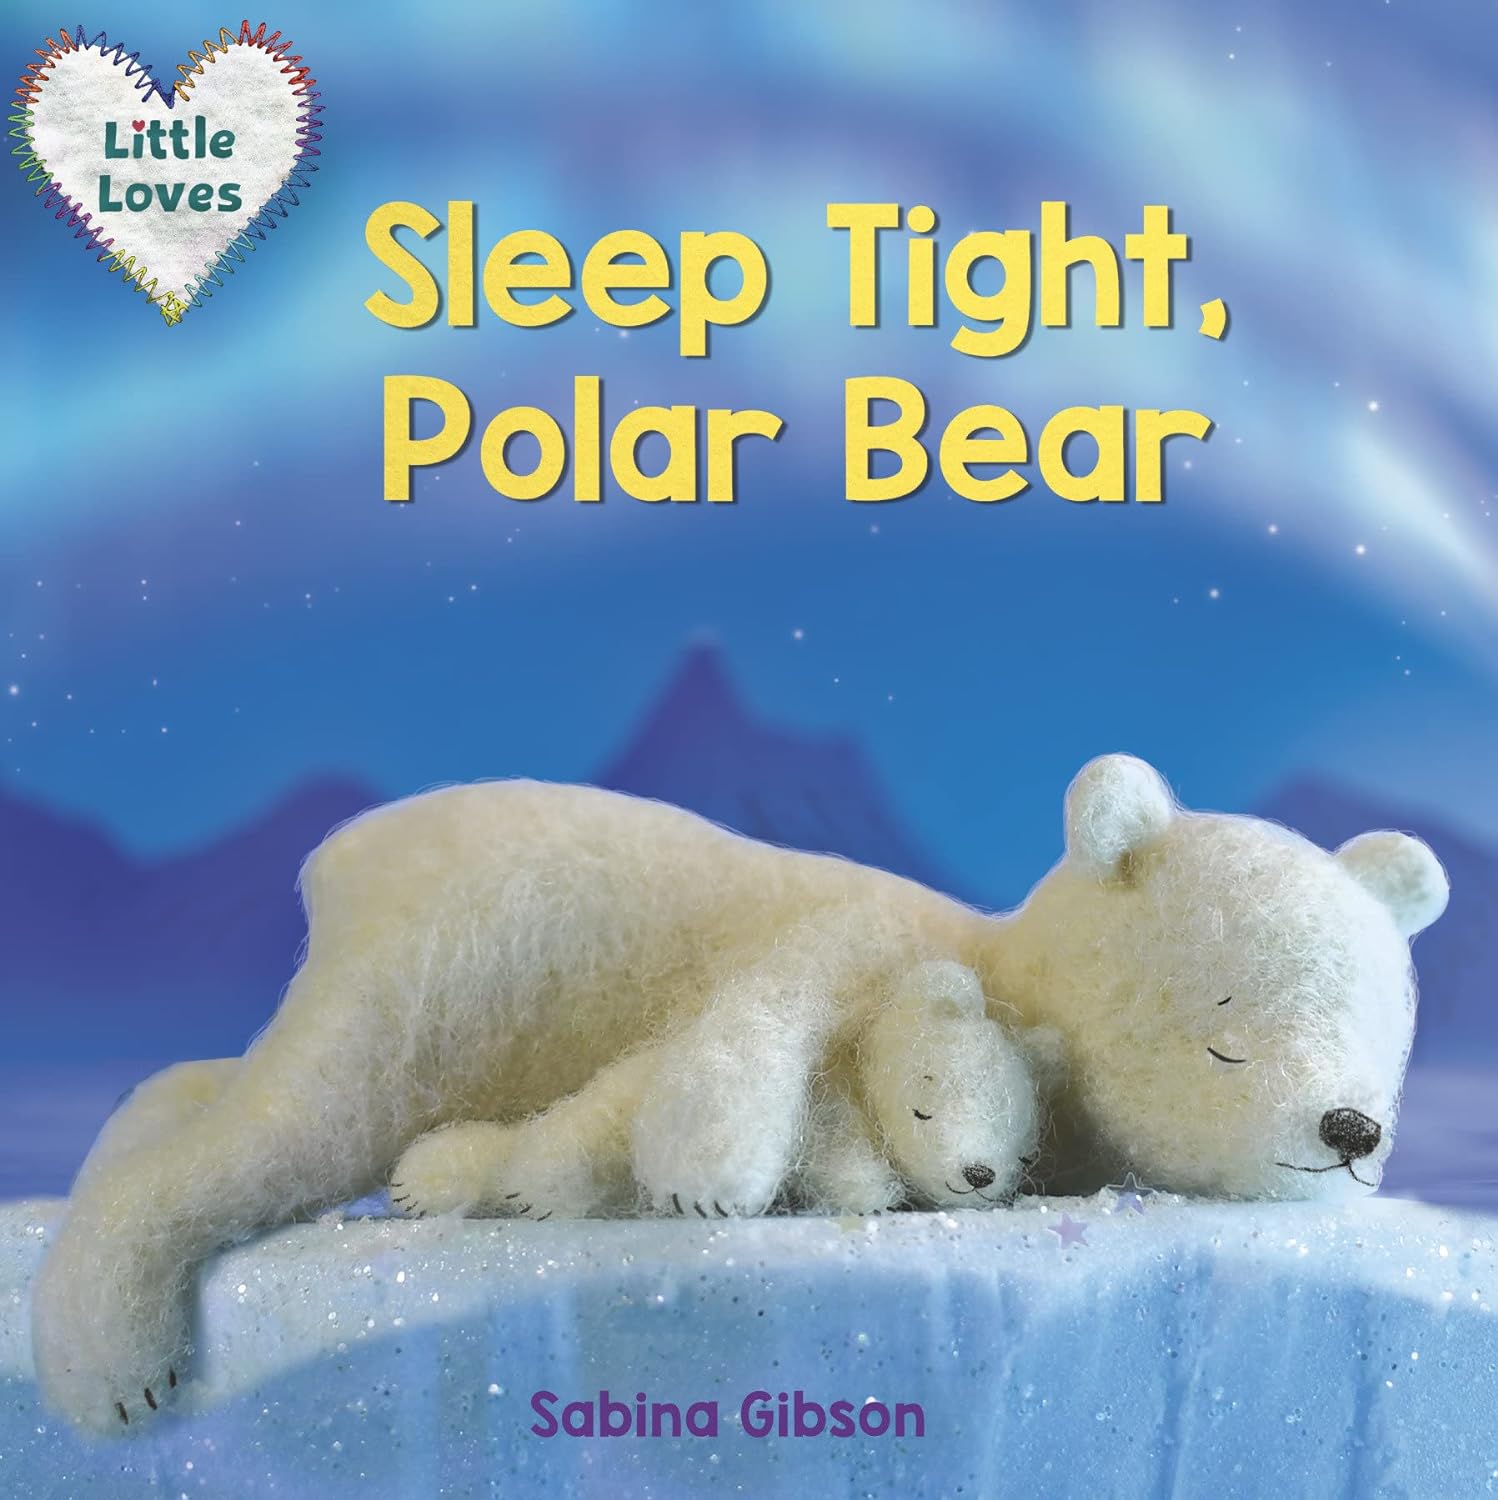 718kIiGsN7L._SL1500_ Polar Bear Books for Toddlers